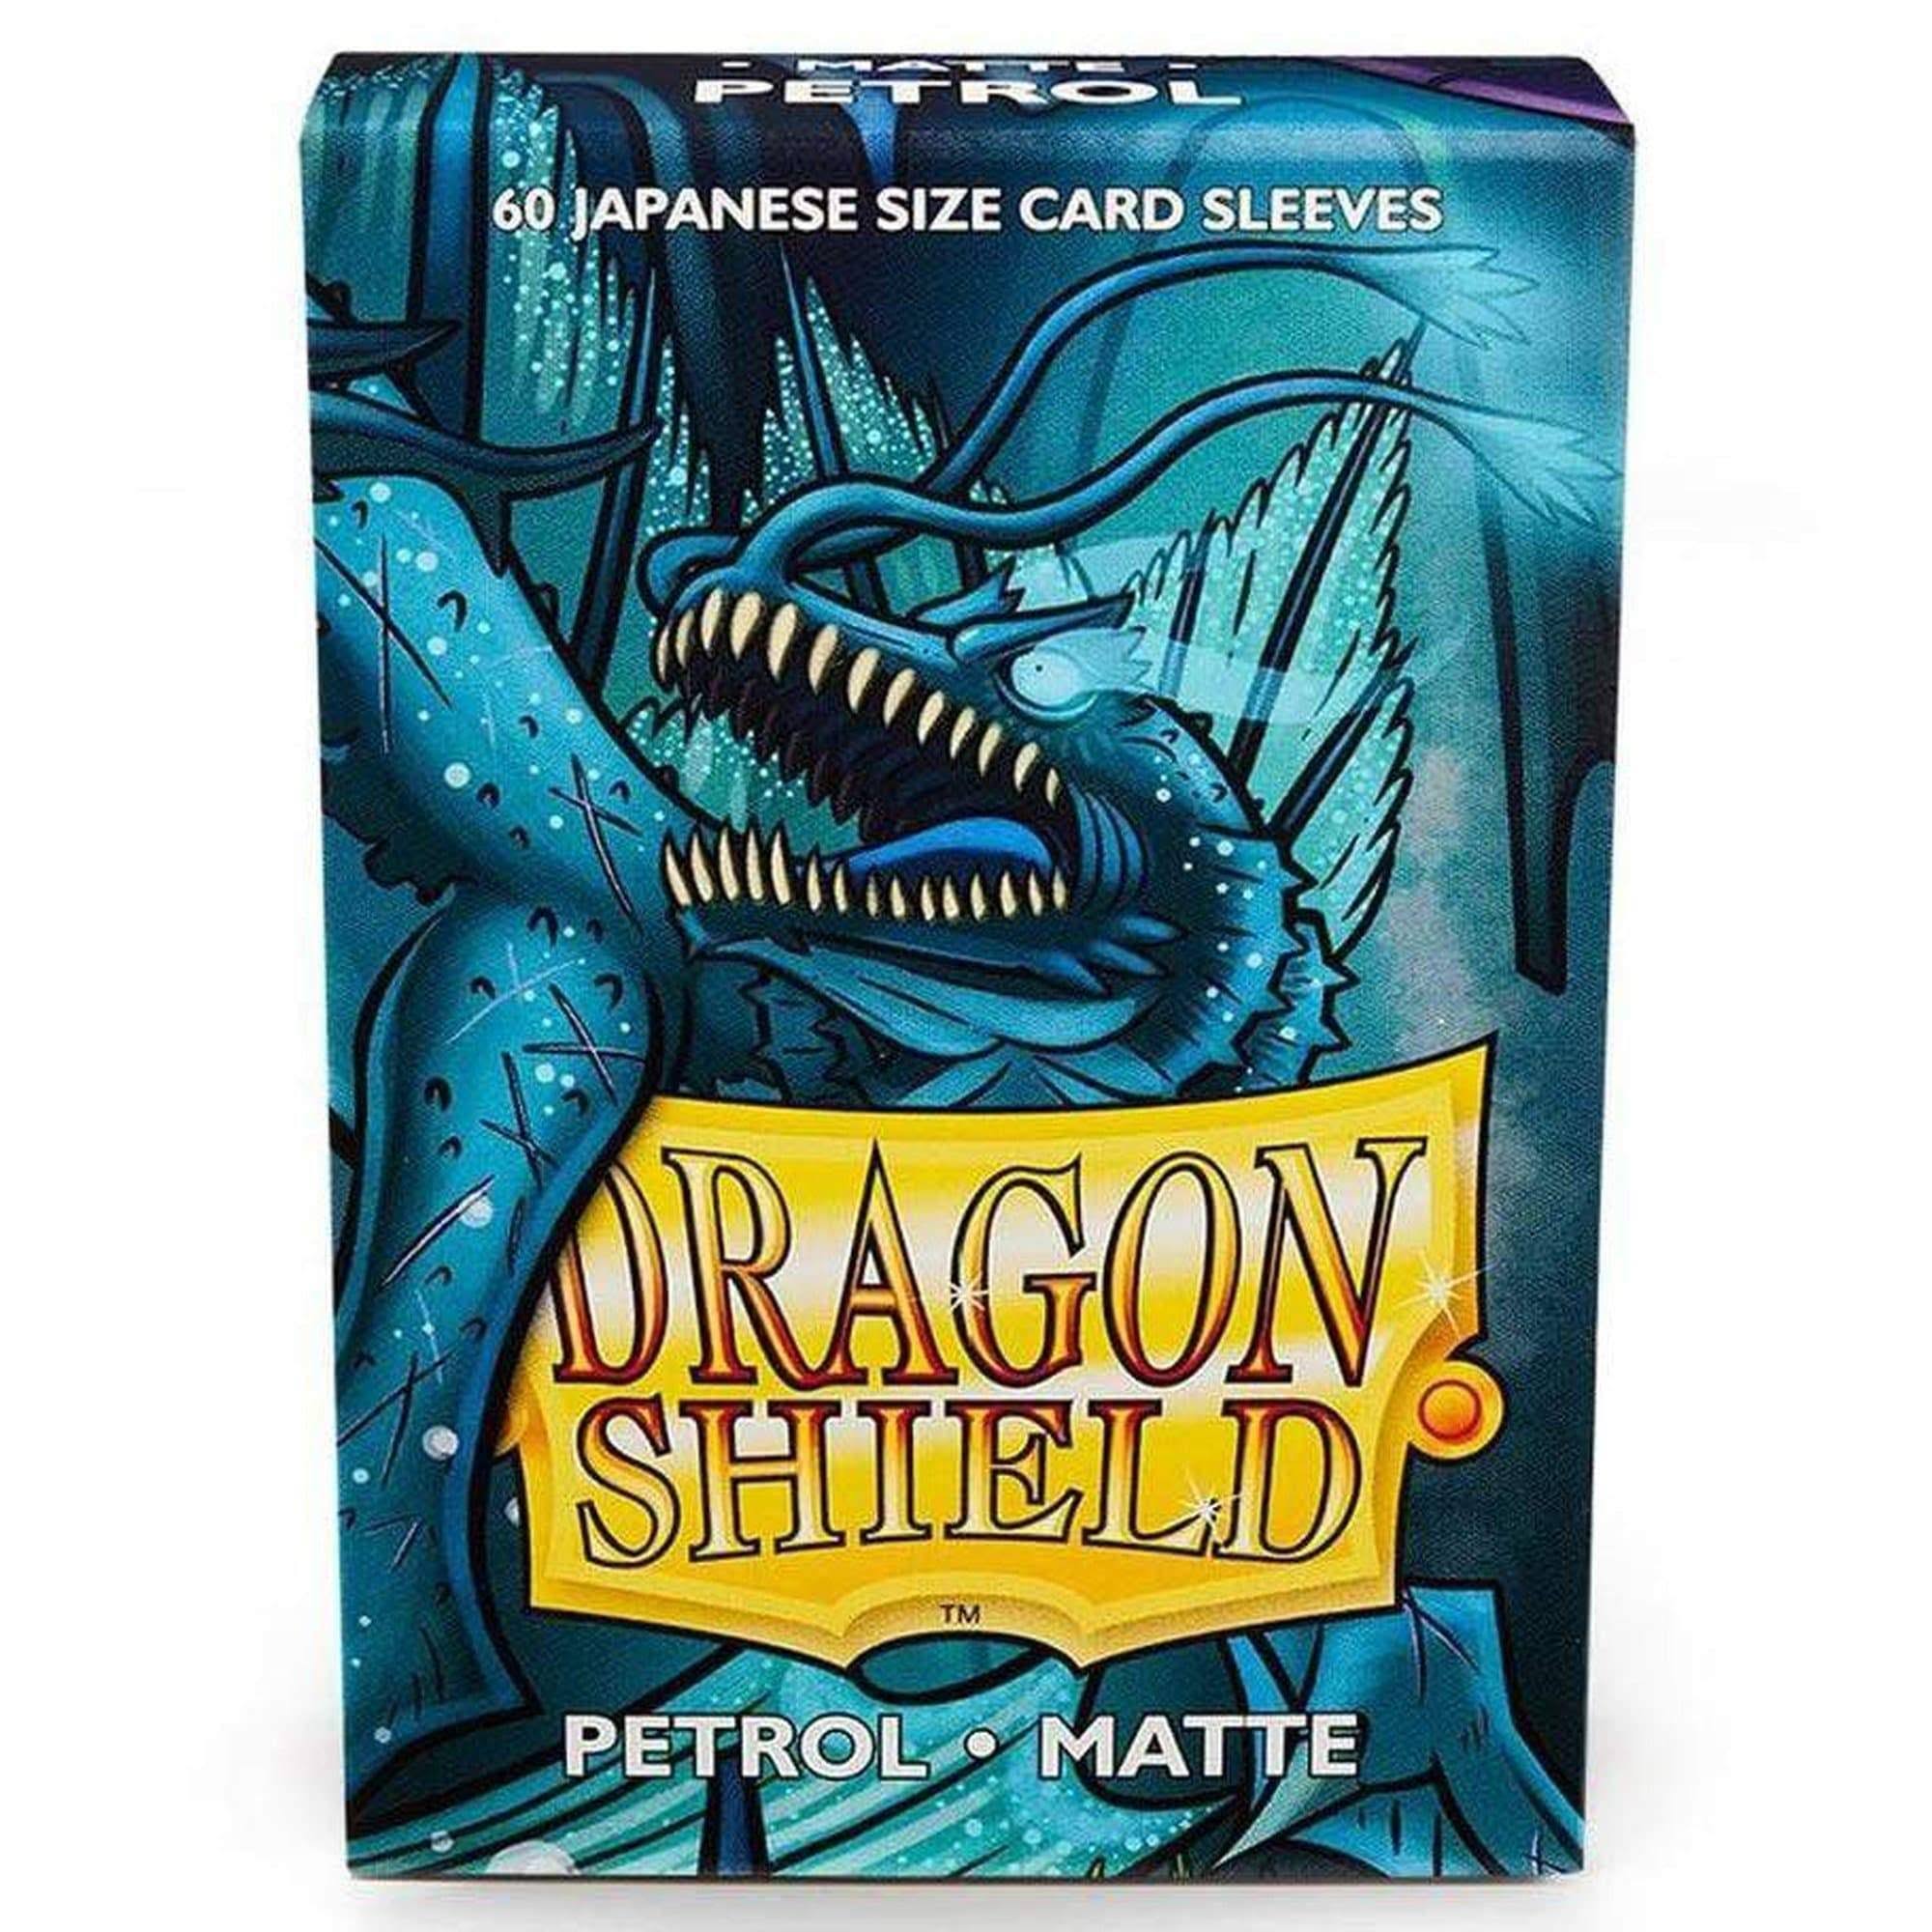 Dragon Shield Yu-Gi-Oh! Size Card Sleeves - Matte Petrol, 60ct